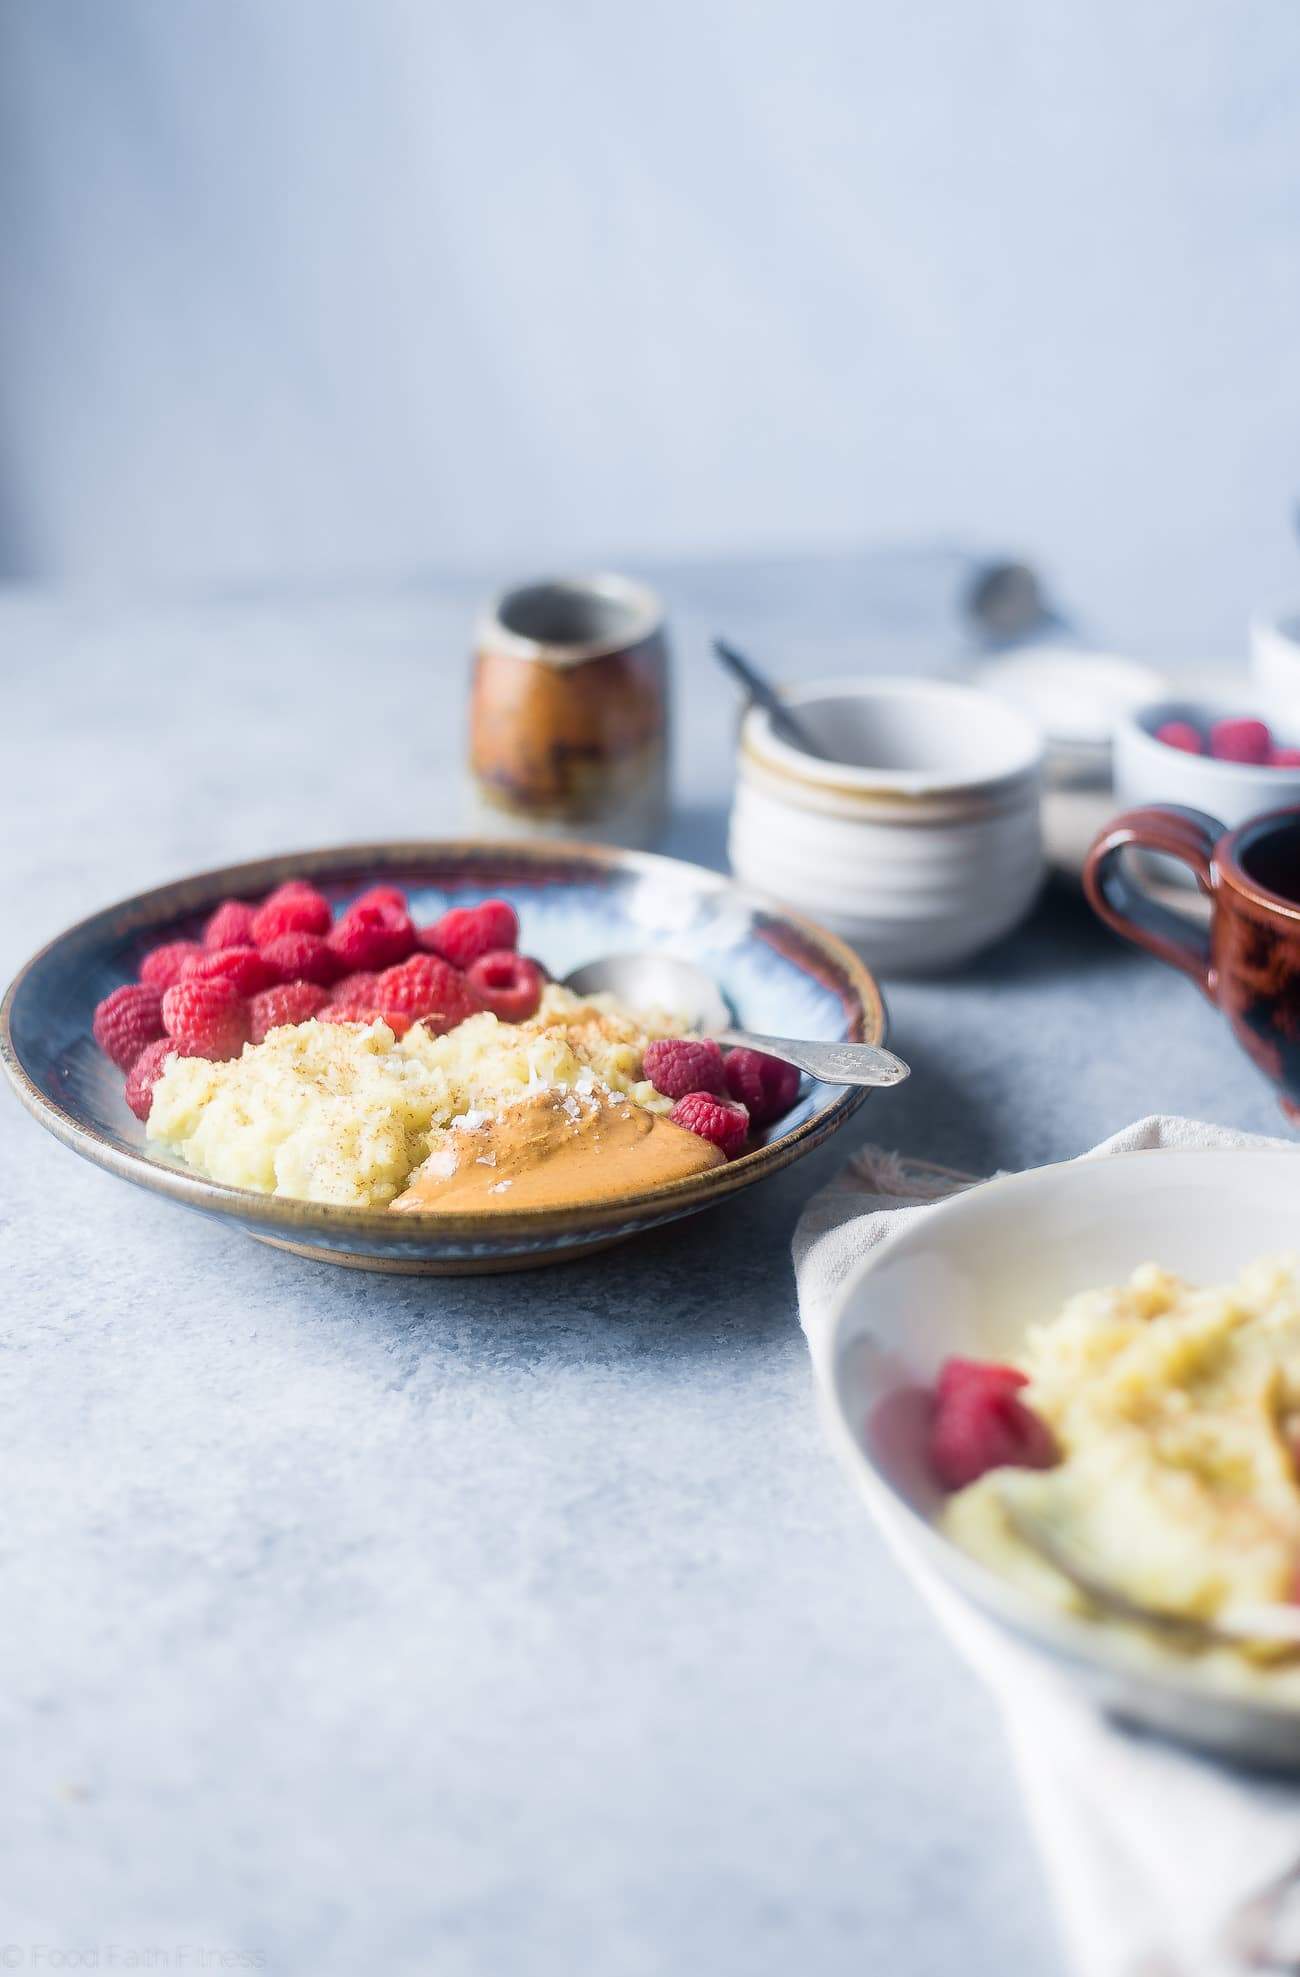 PB & J Sweet Potato Breakfast Bowl - This easy, 5 ingredient, paleo and vegan friendly breakfast bowl is a gluten free, whole30 compliant breakfast that is only 200 calories! | #Foodfaithfitness | #paleo #vegan #glutenfree #healthy #whole30